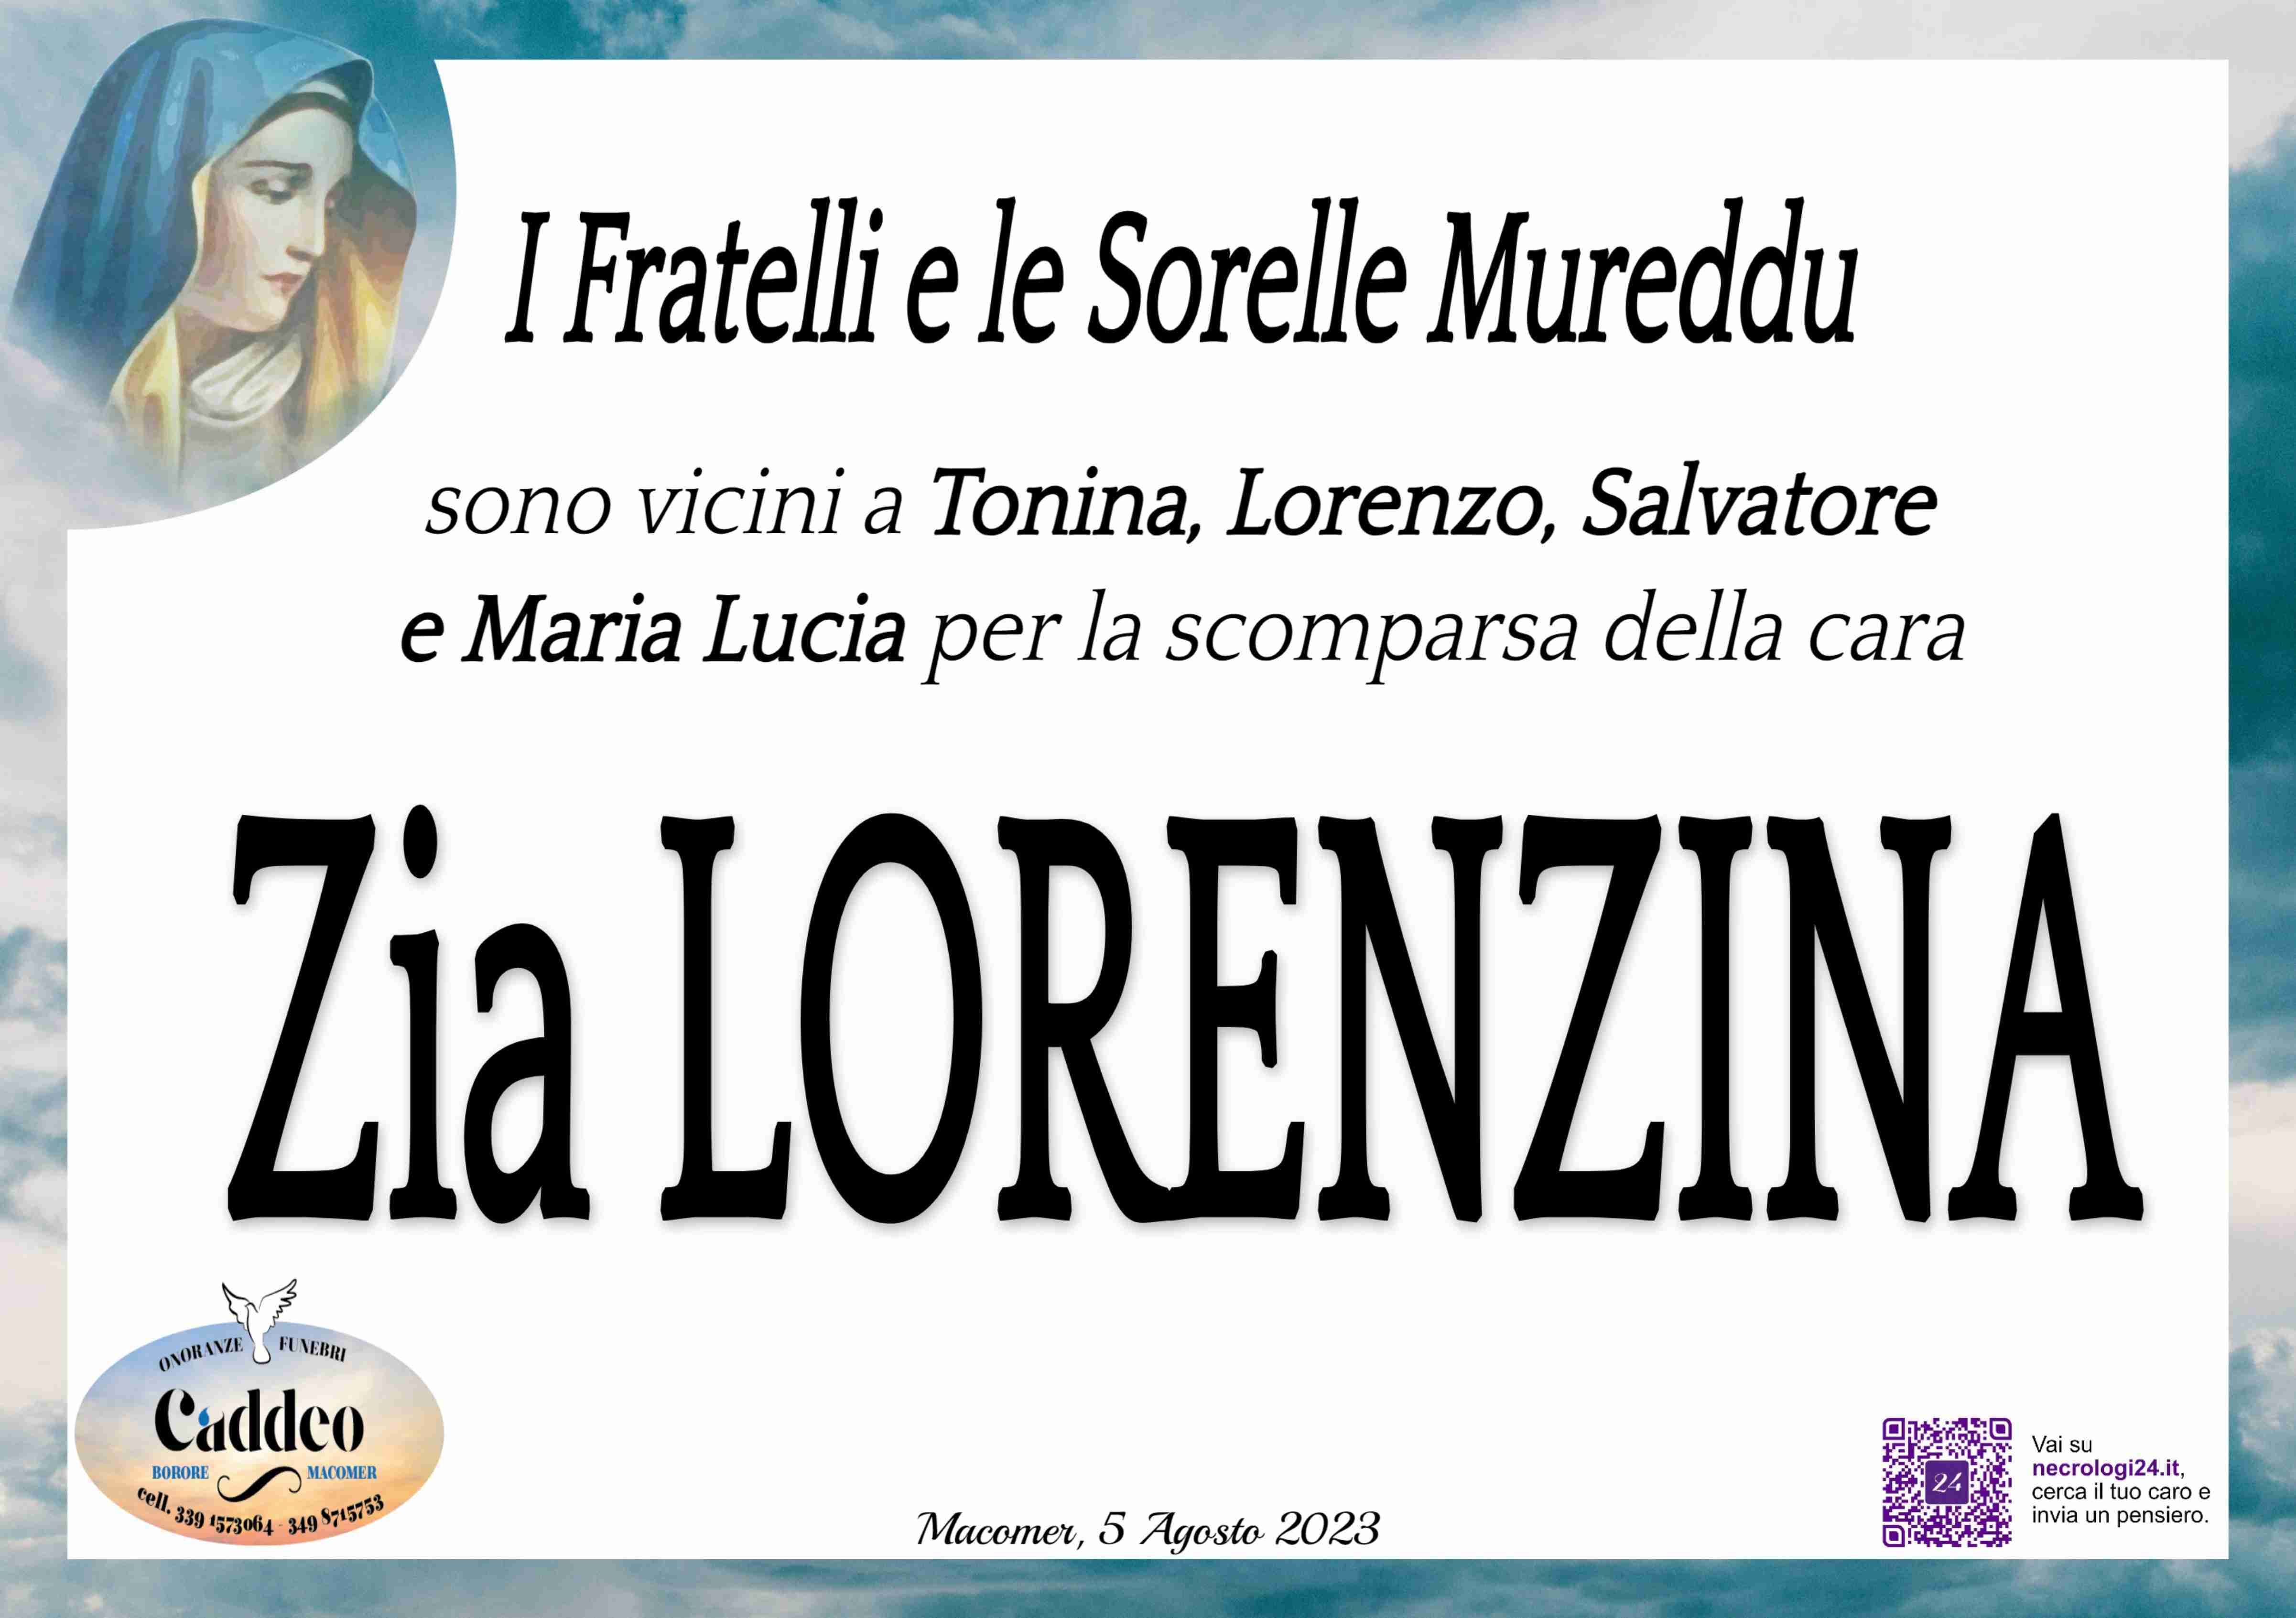 Lorenzina Zoccheddu